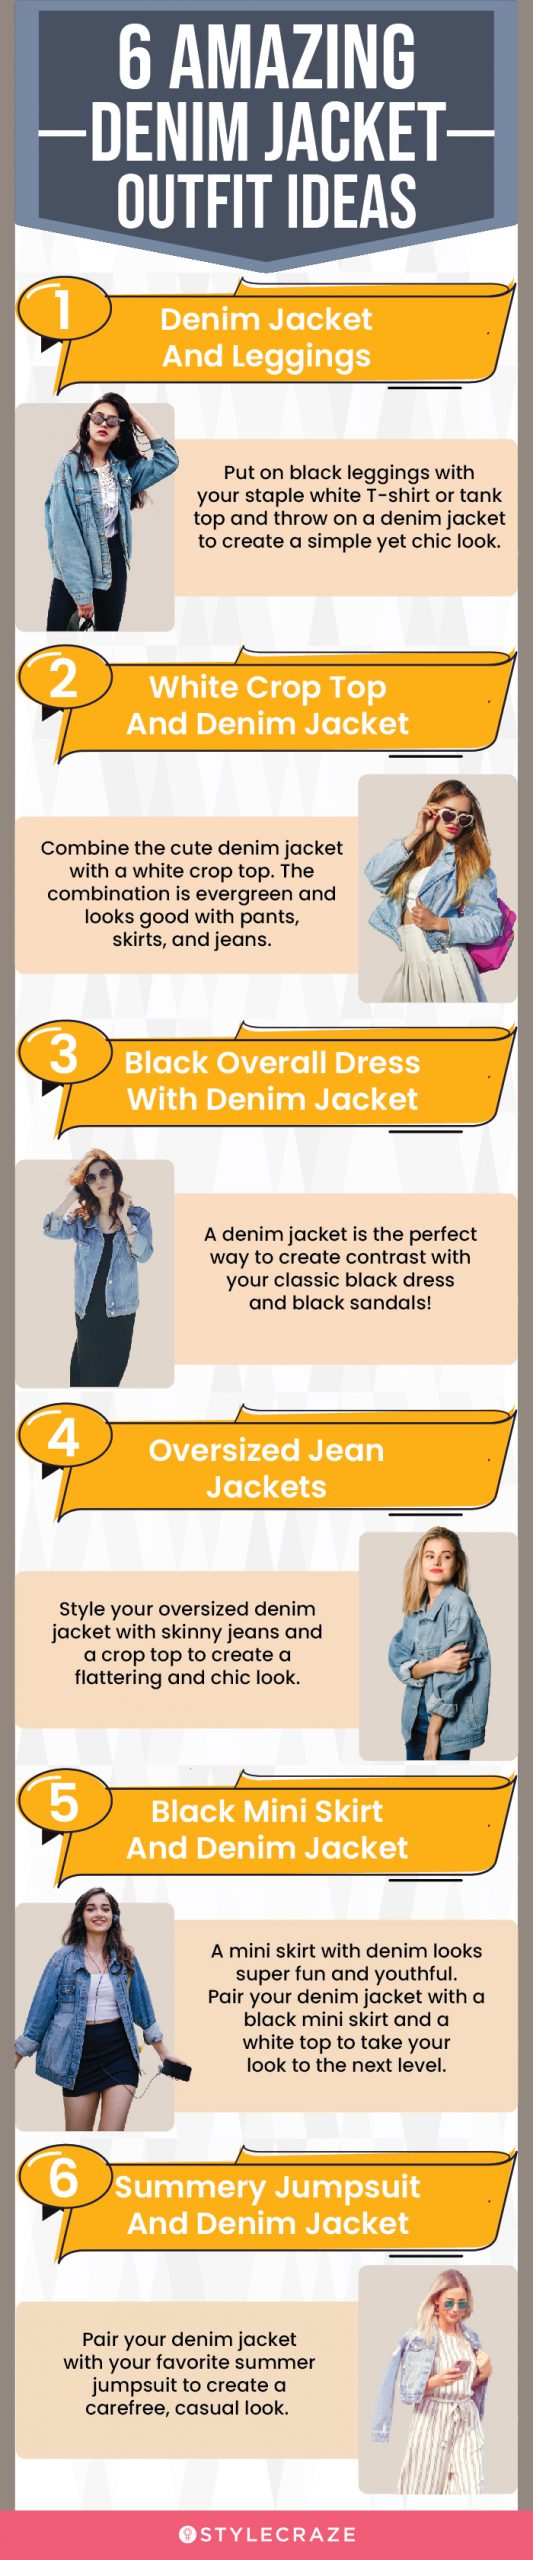 6 amazing denim jacket outfit ideas (infographic)